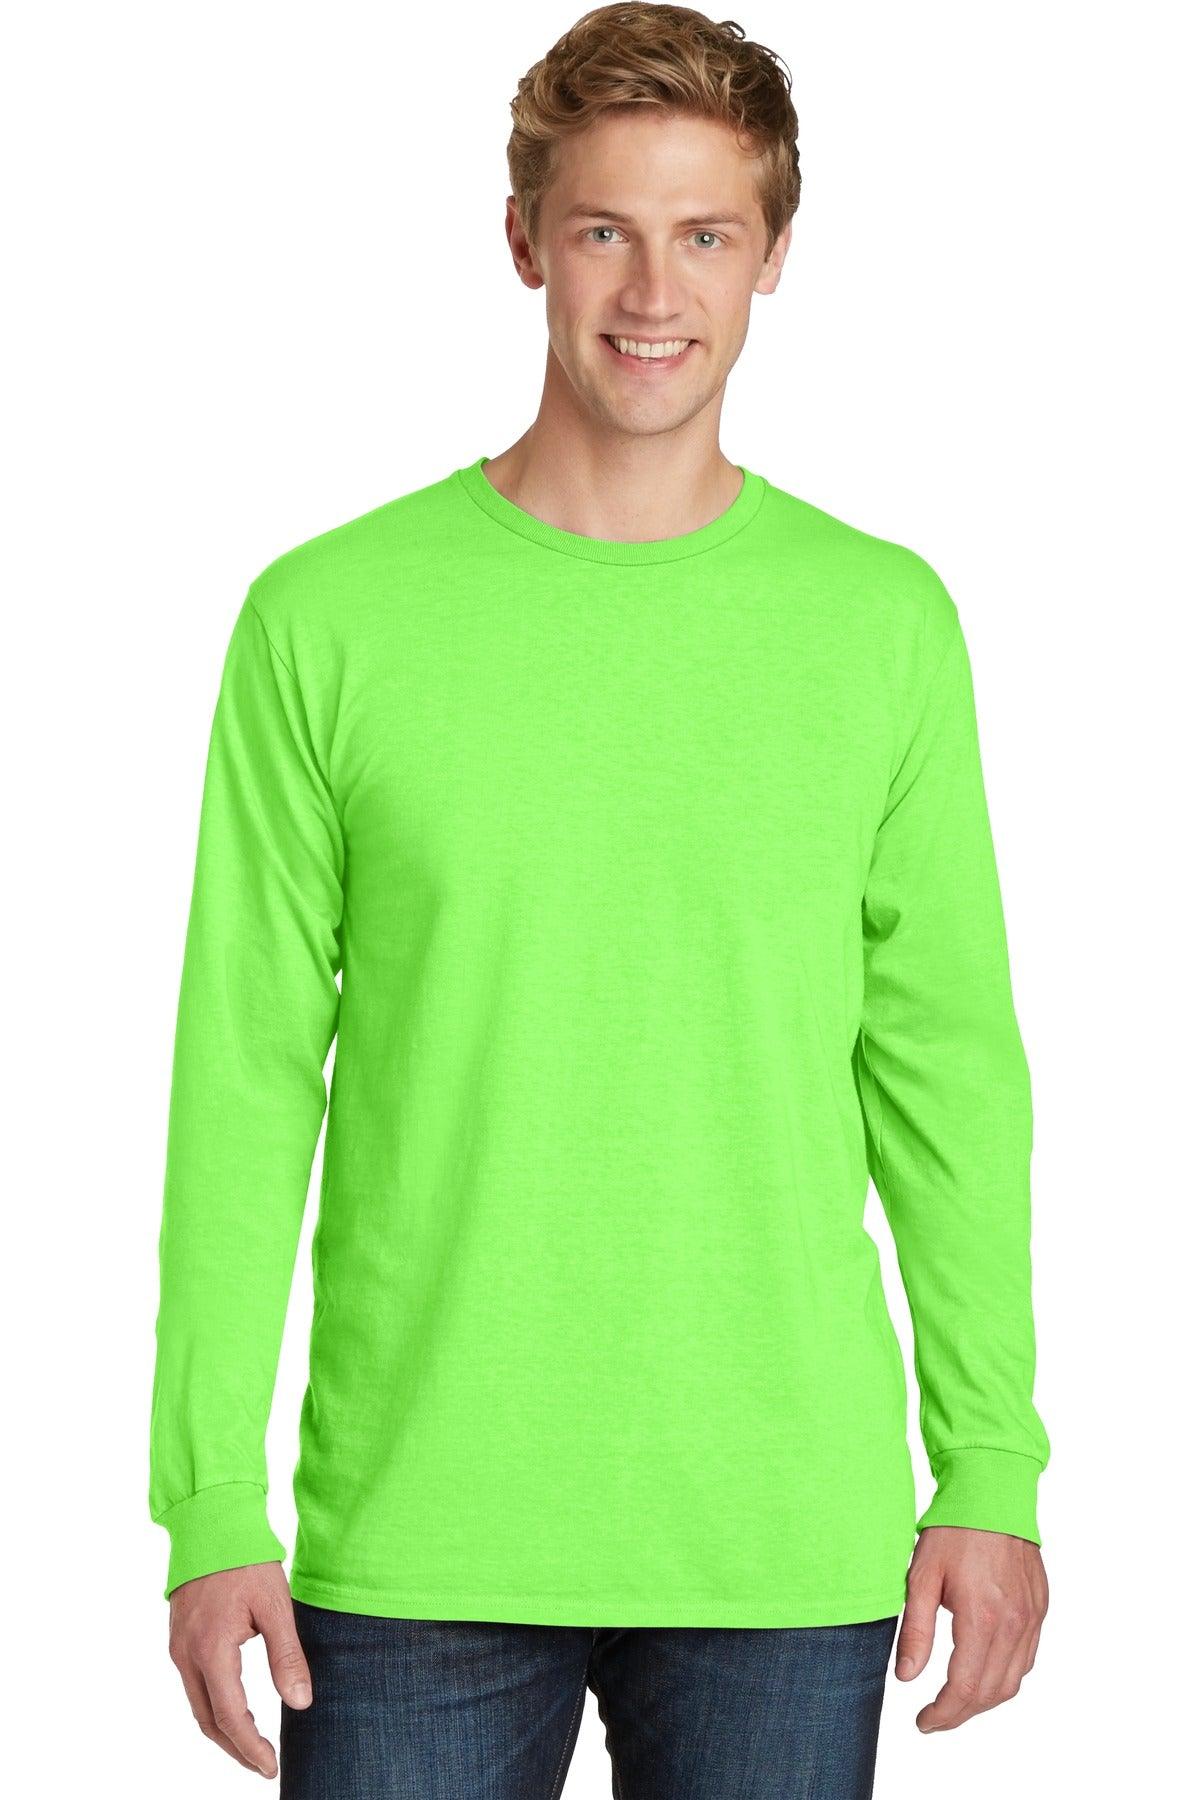 Port & Company Beach Wash Garment-Dyed Long Sleeve Tee PC099LS - Dresses Max